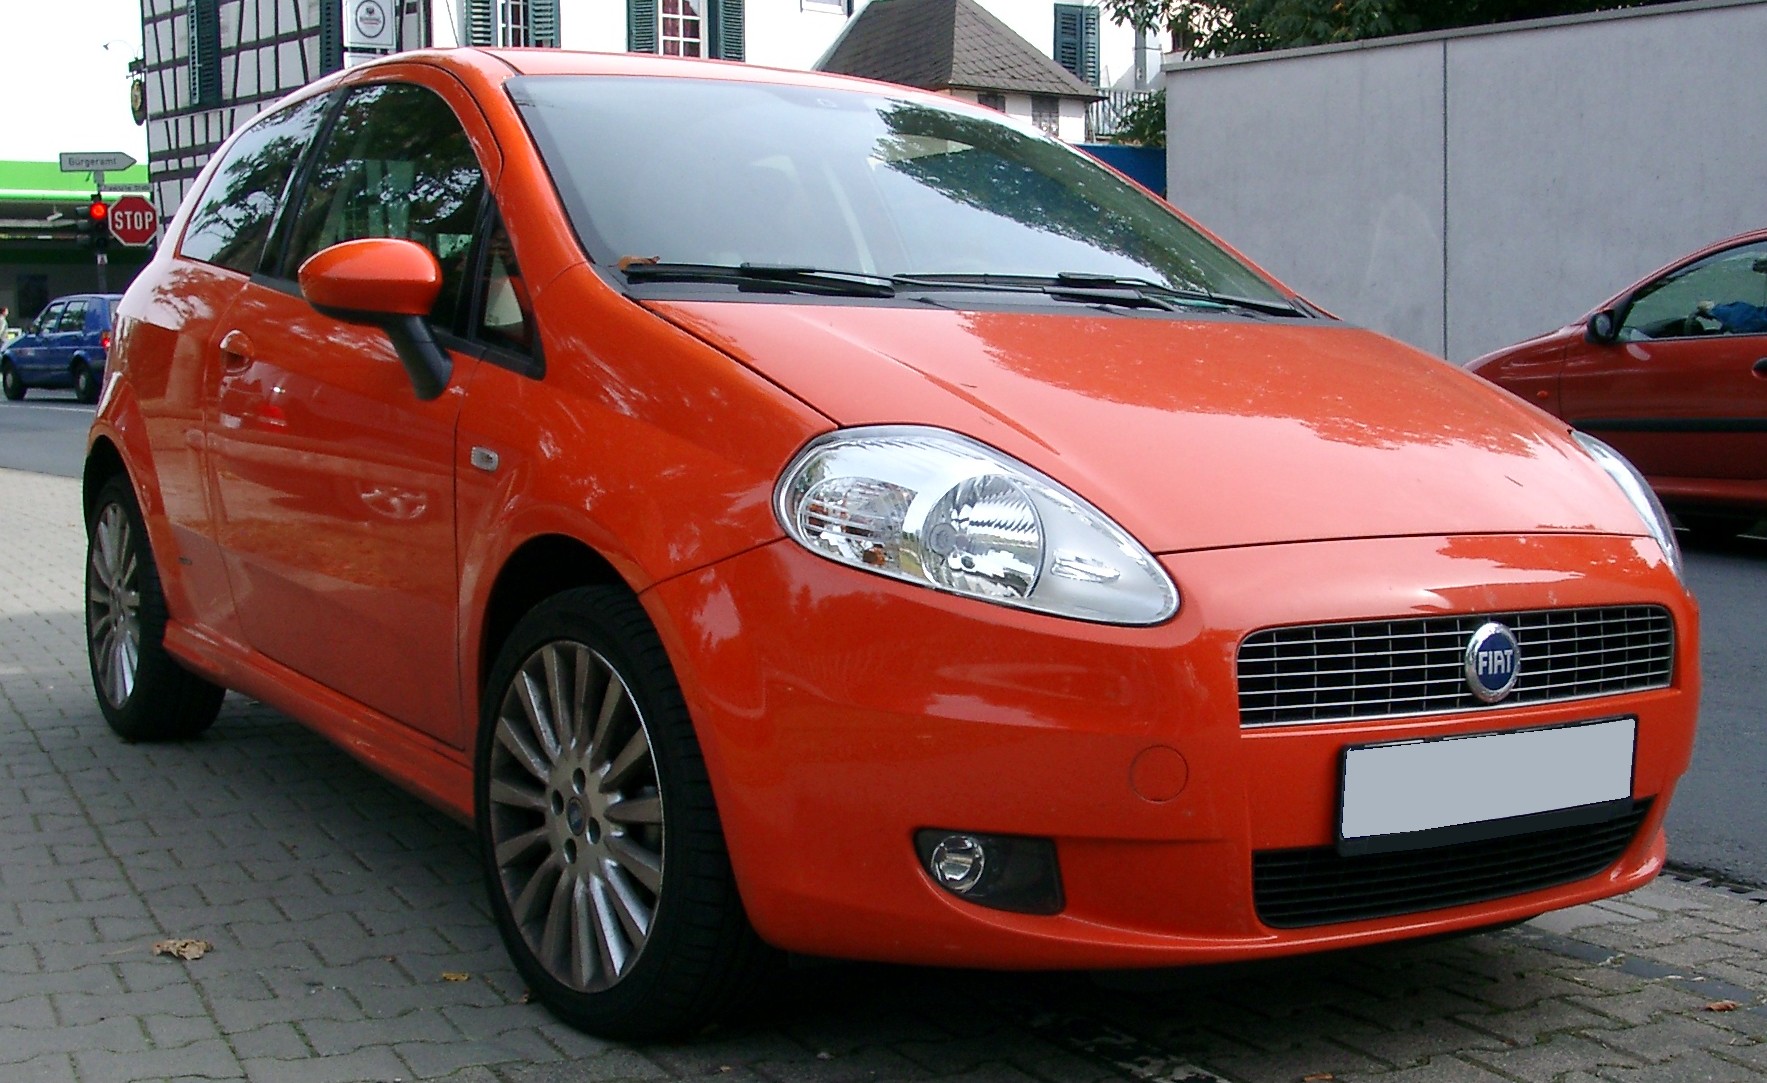 File:Fiat Punto front 20070920.jpg